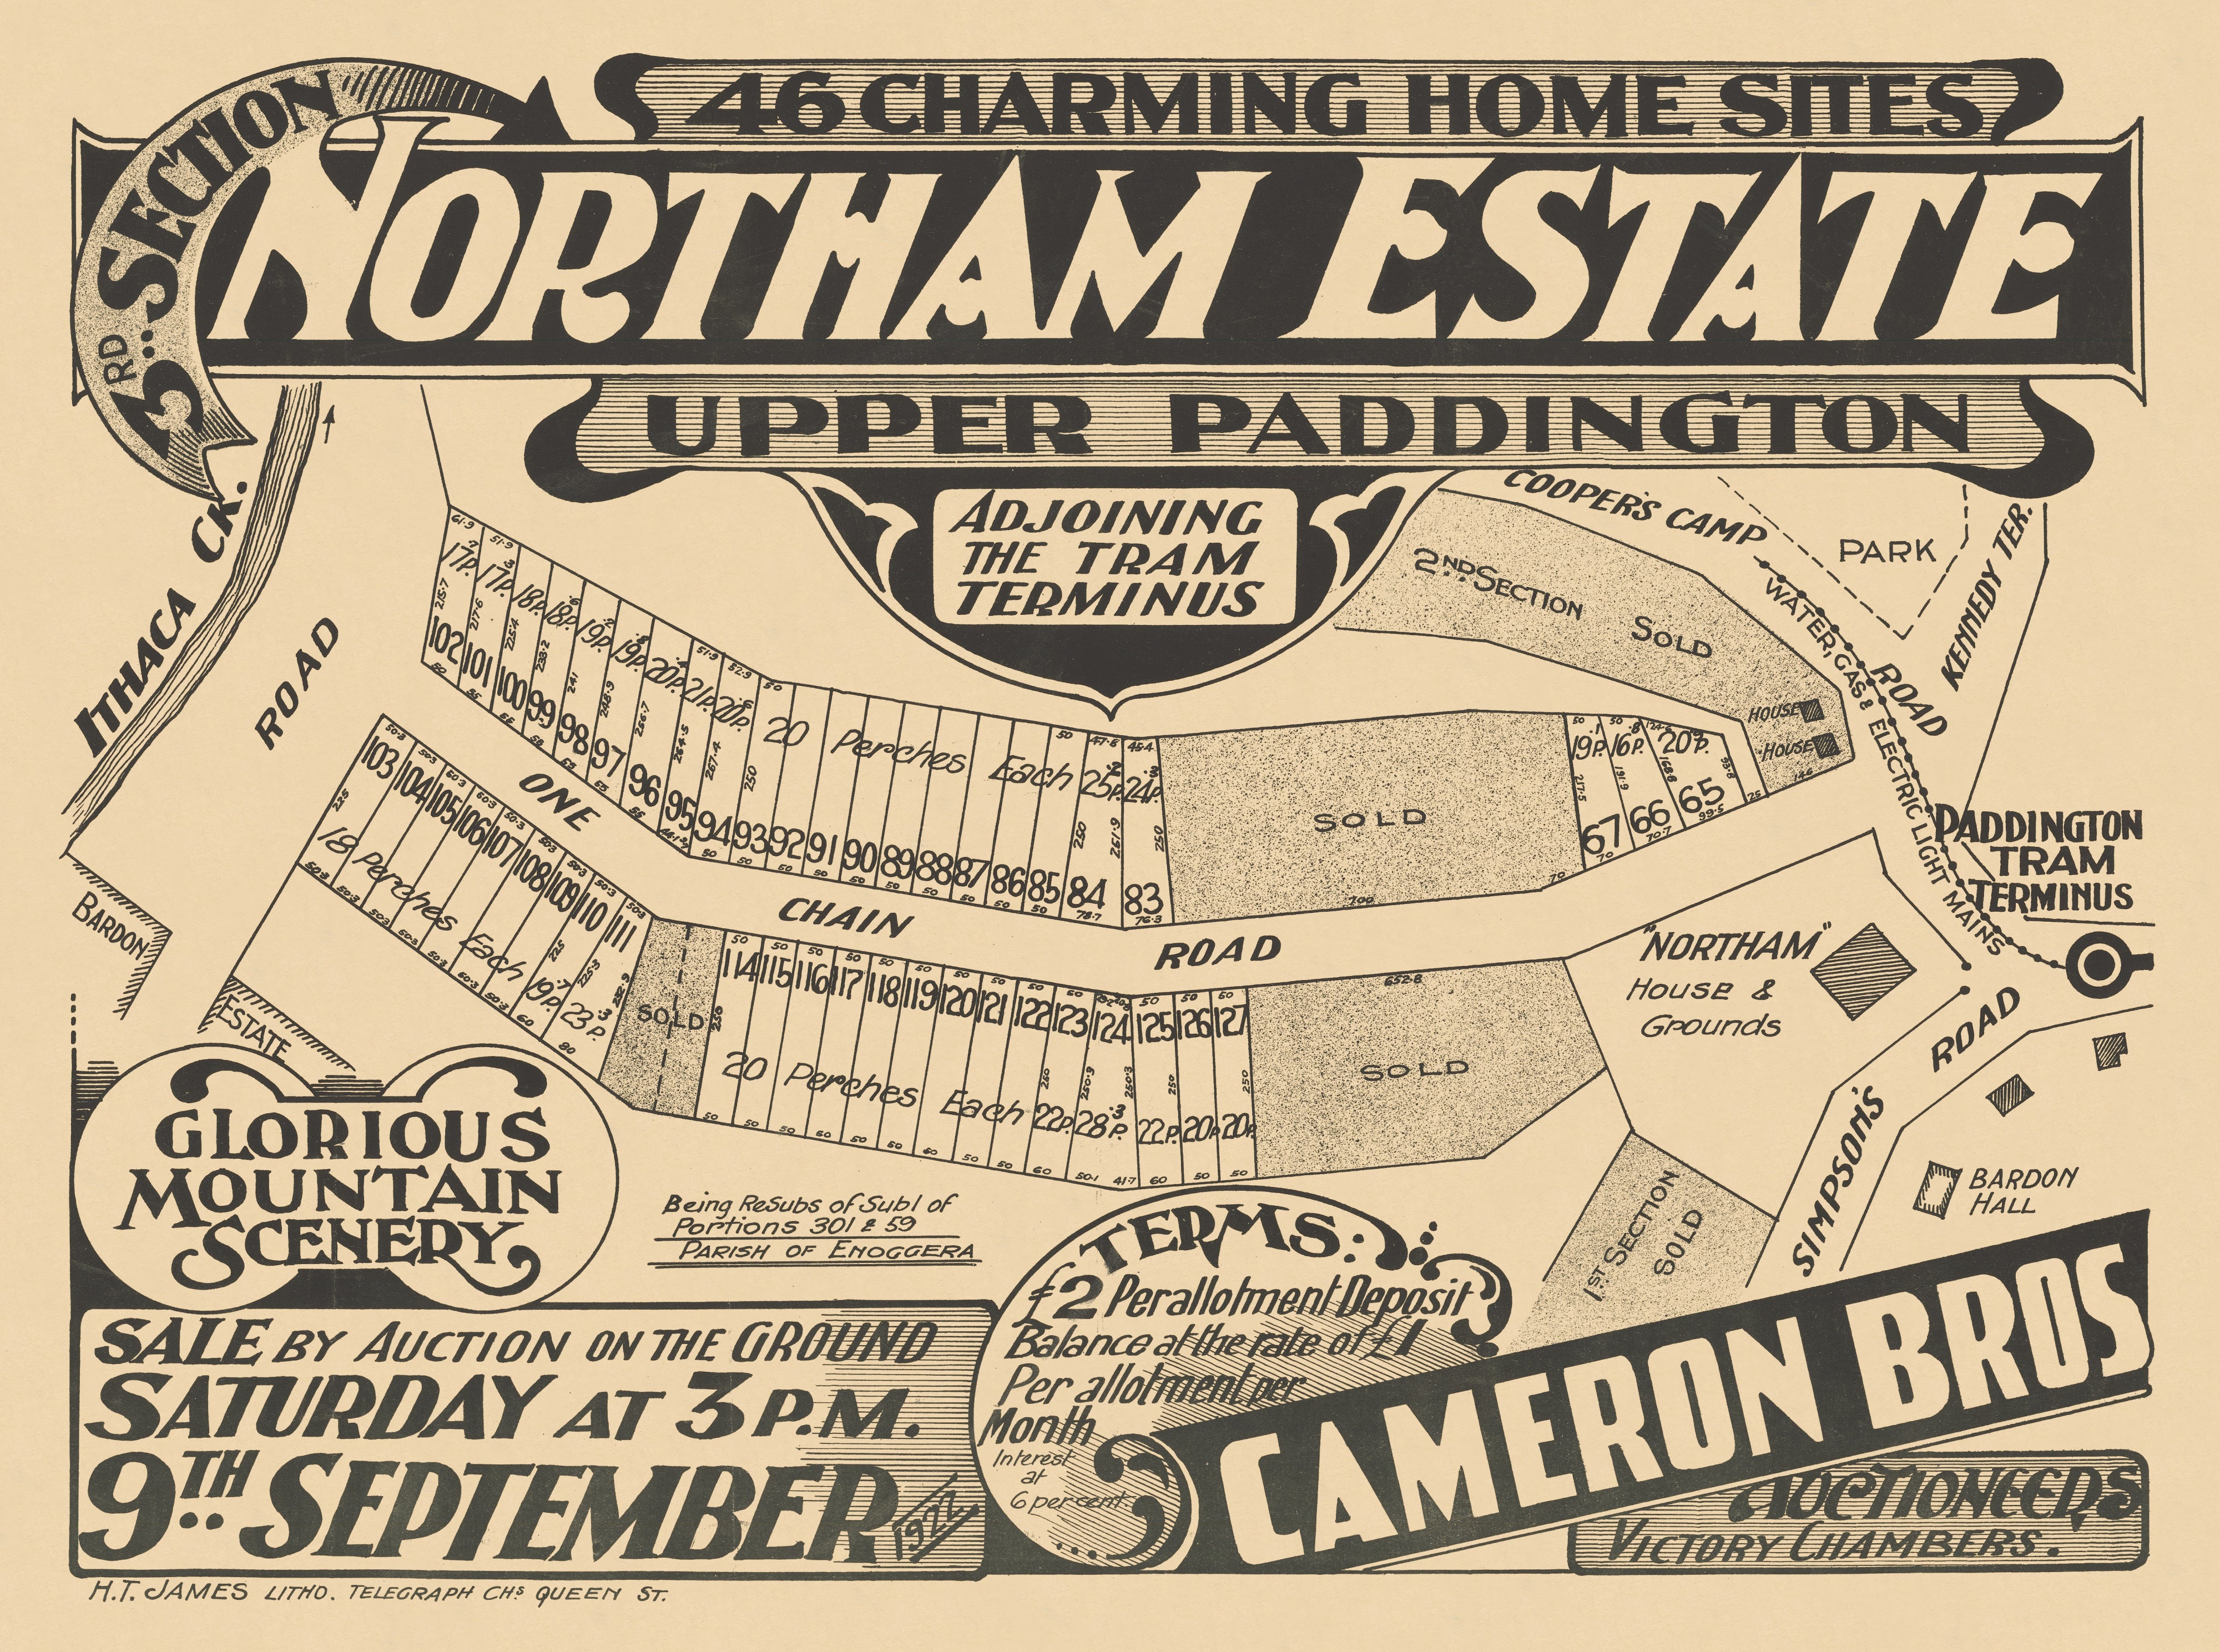 1922 Bardon - Northam Estate - 3rd Section